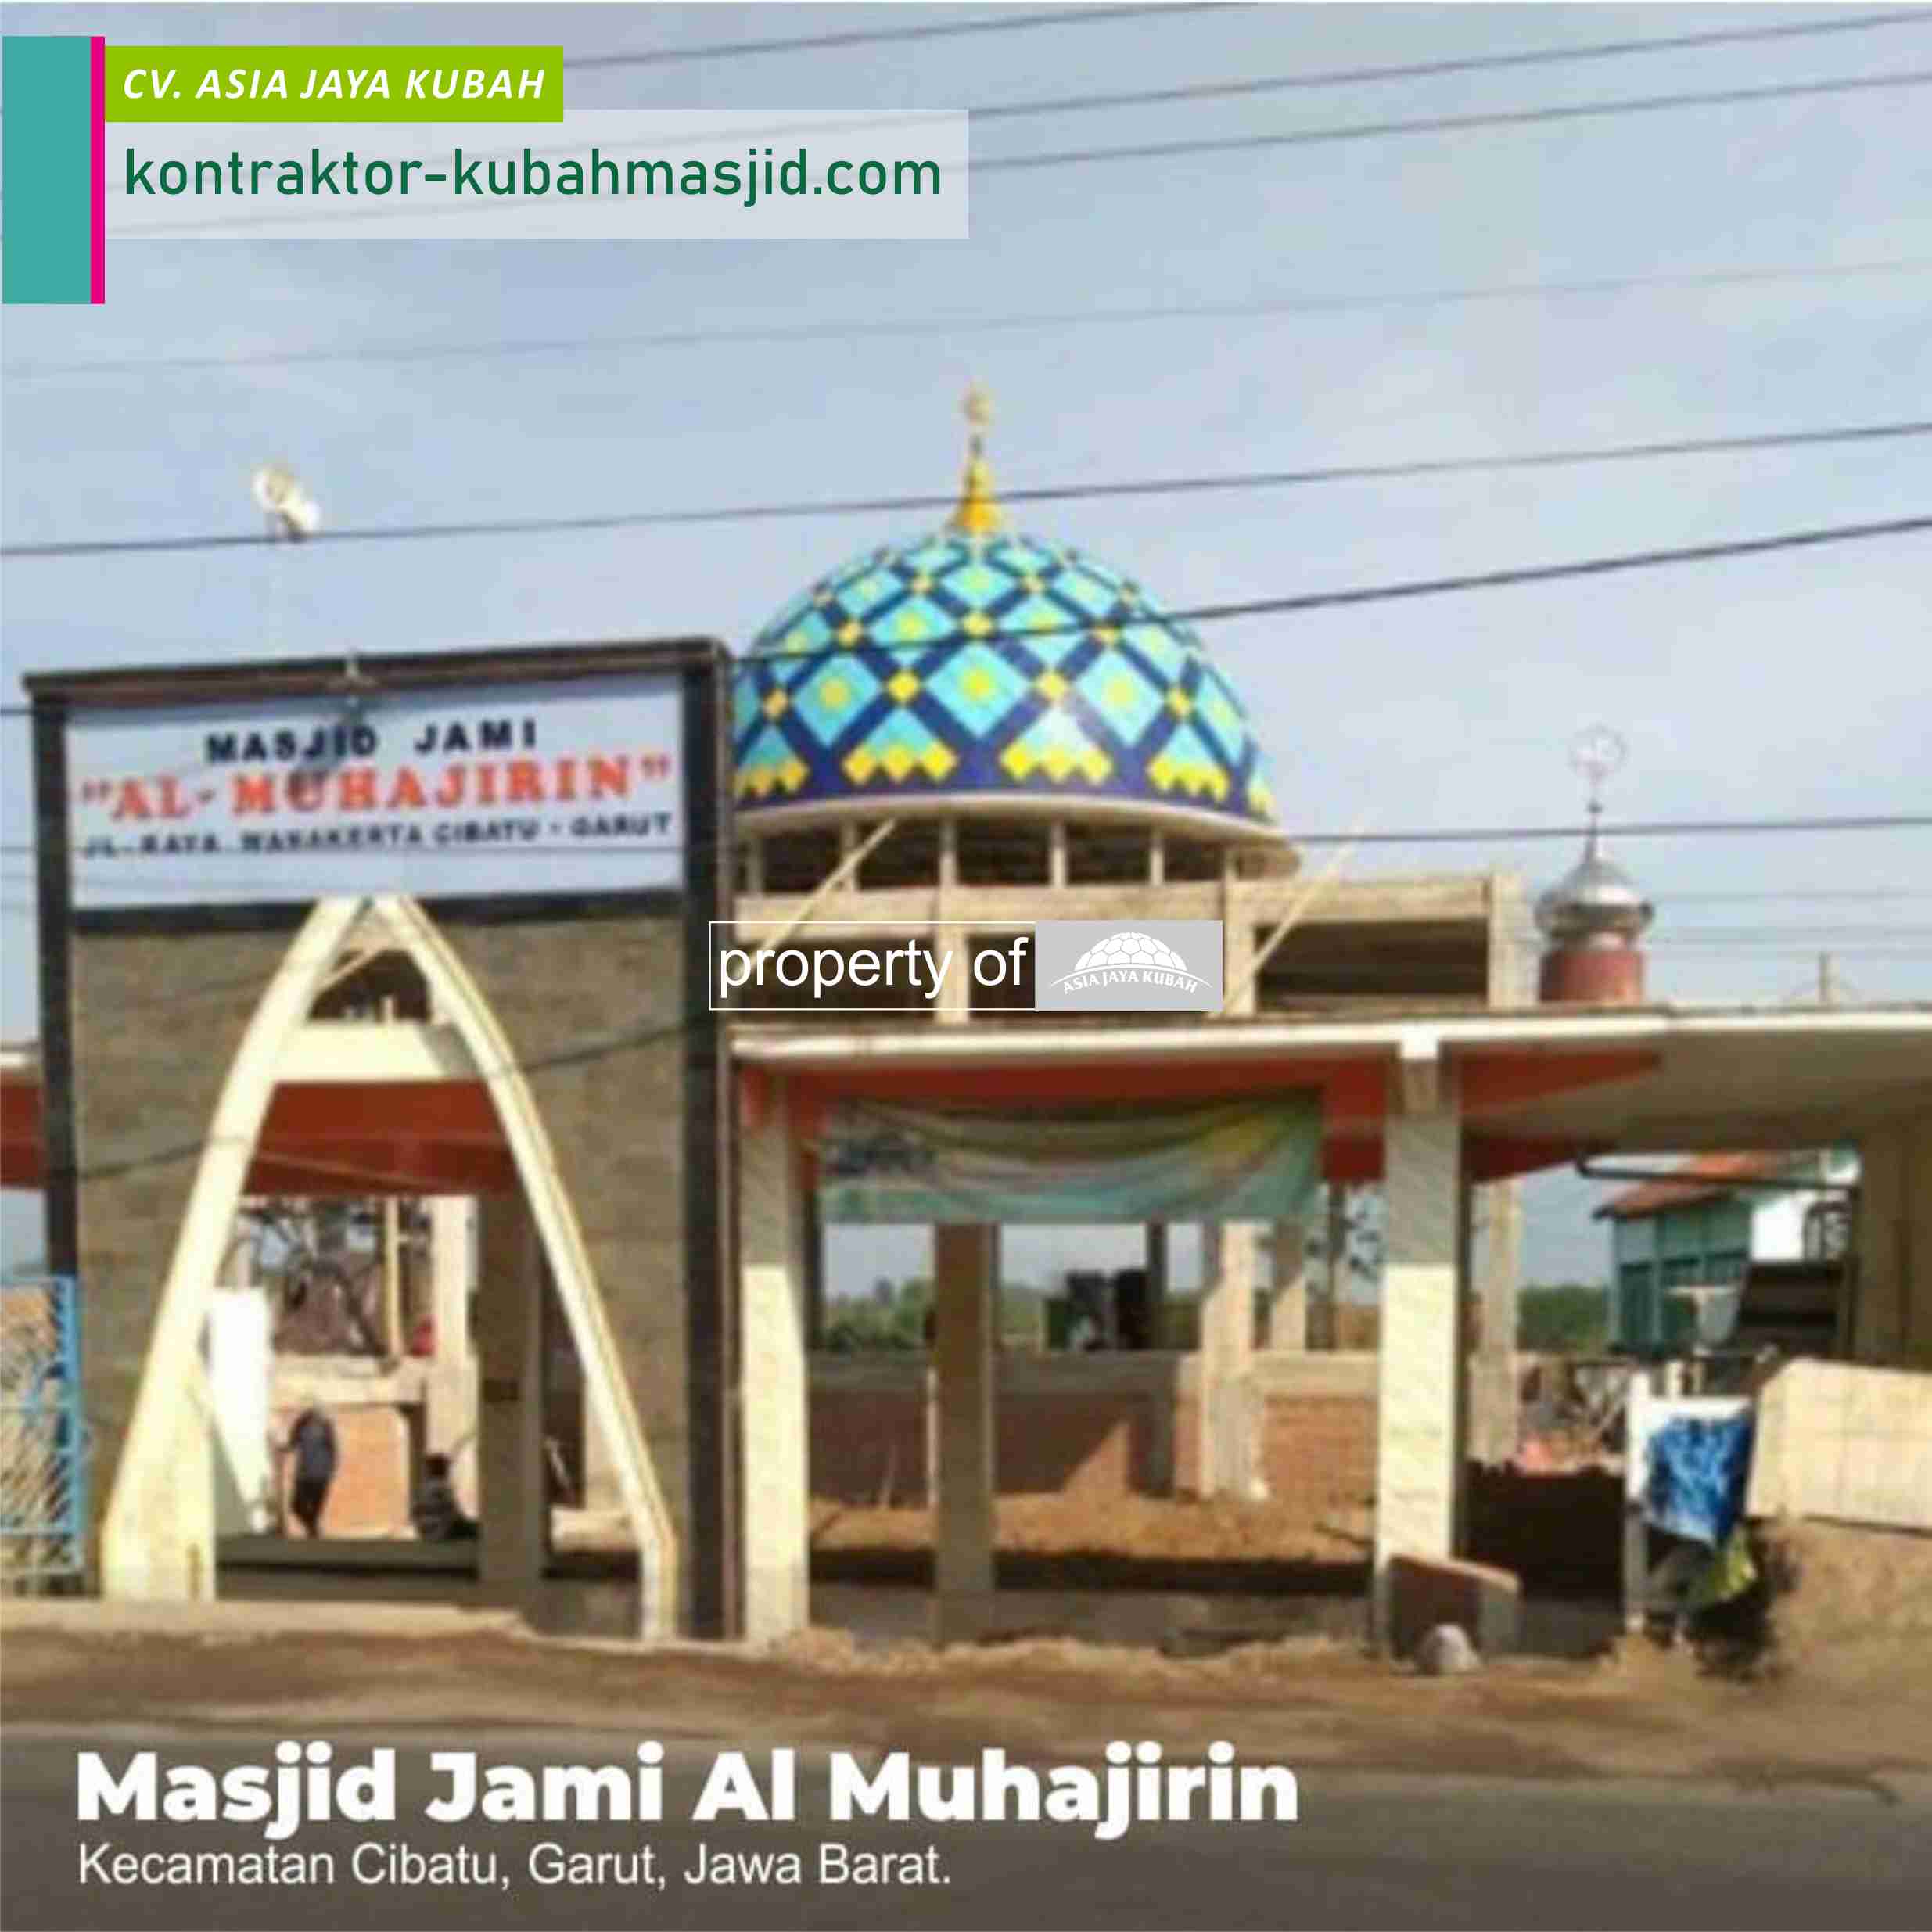 Harga Kubah Masjid Enamel 2022 di Intan Jaya